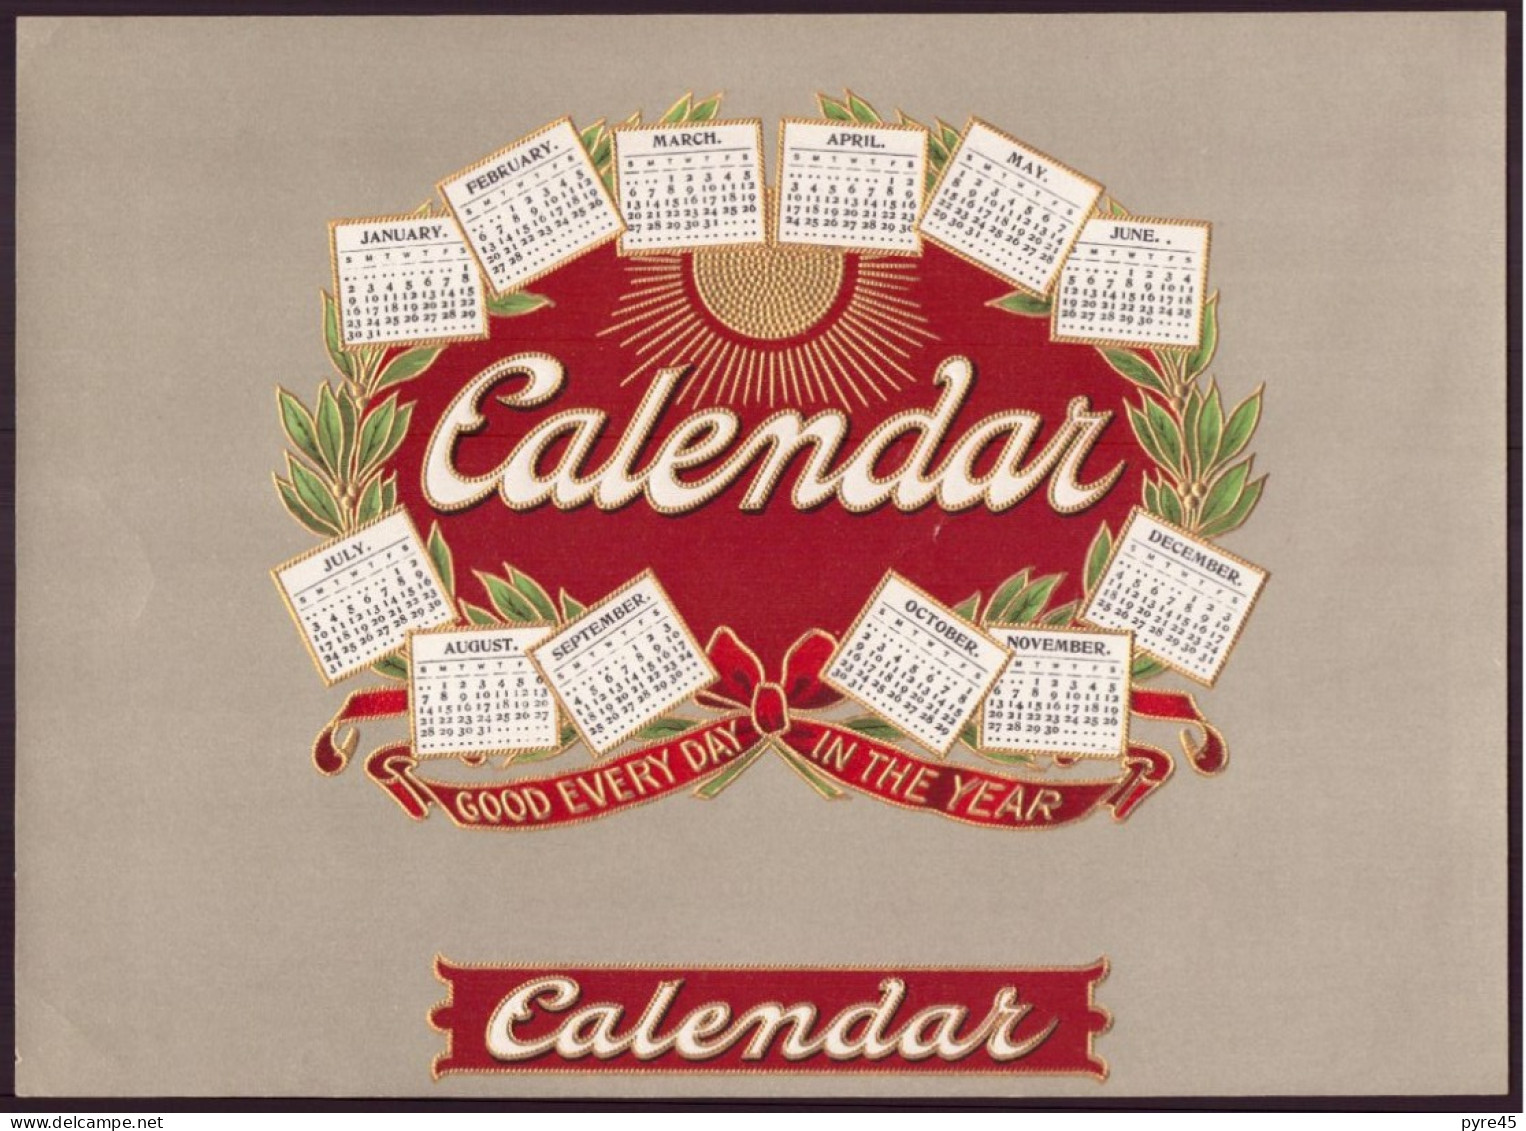 Etiquette Boite De Cigares, Chromo ( 23 X 16.5 Cm ) " Calendar " - Etichette